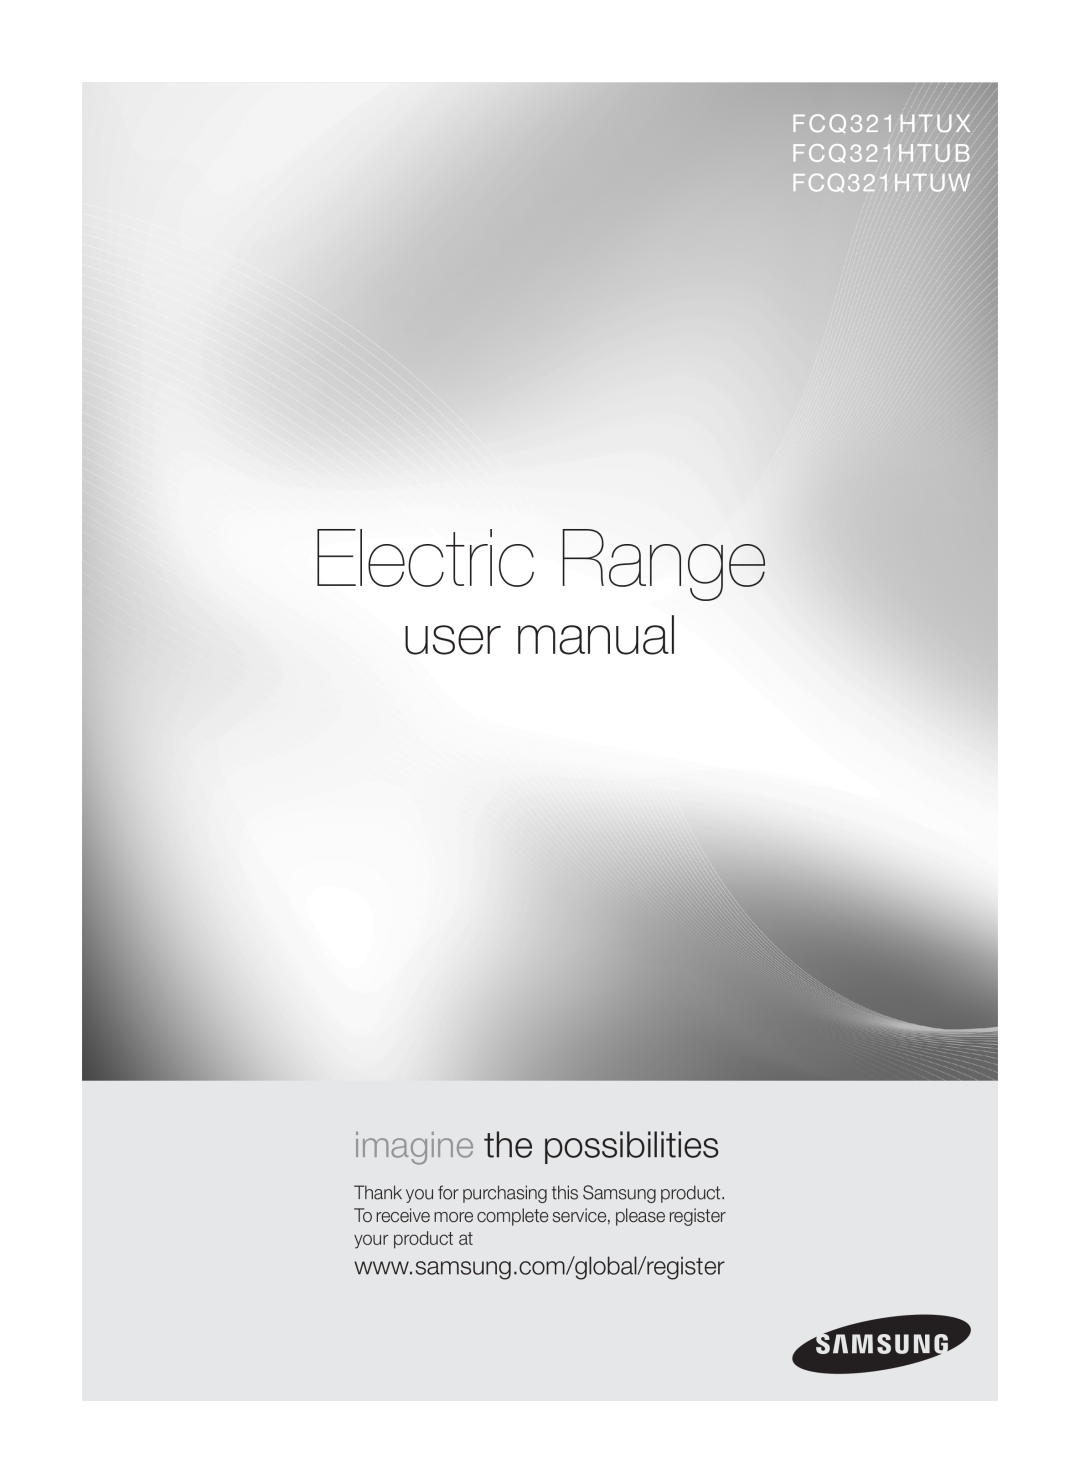 Samsung user manual Electric Range, FCQ321HTUX FCQ321HTUB FCQ321HTUW, imagine the possibilities 